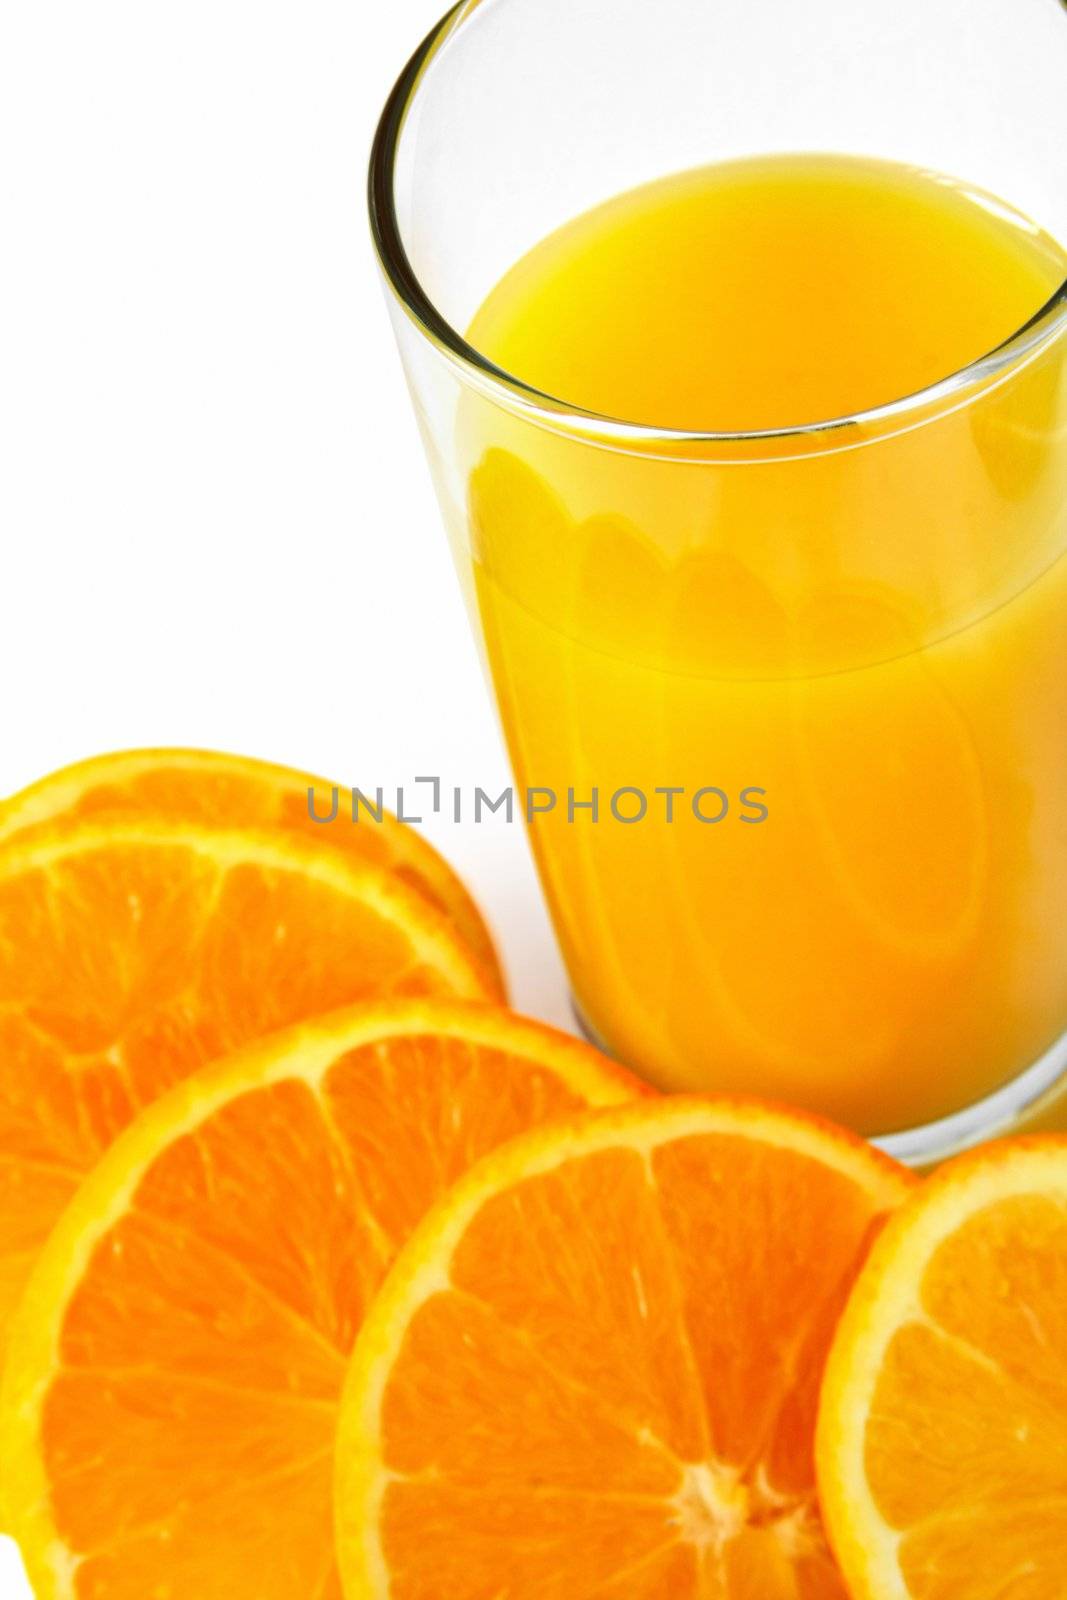 A glass of orange juice with oranges around it